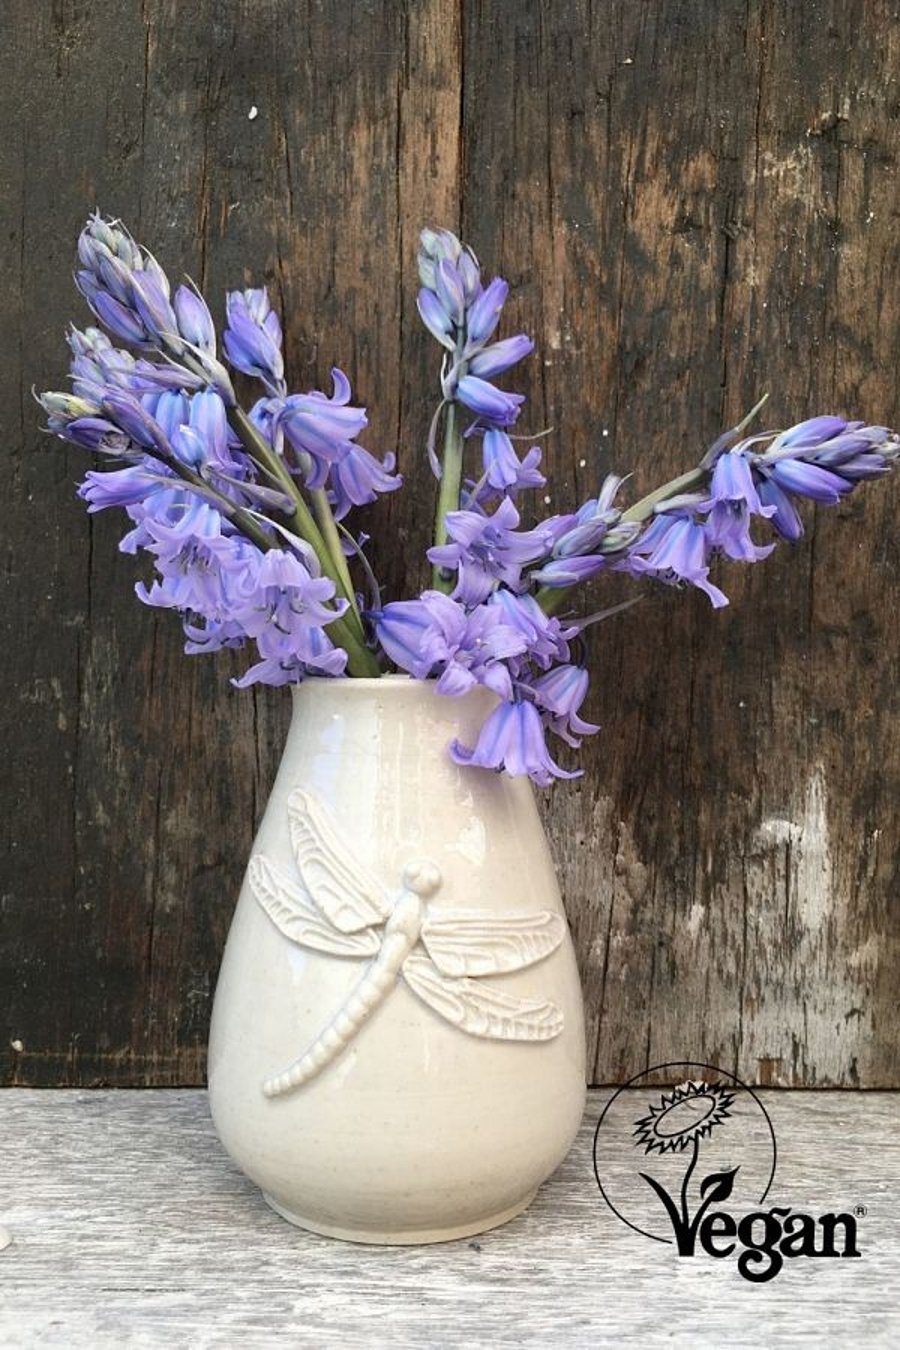 Handmade, ceramic vase - vegan certified. The St Clements Vase - Dragonfly 